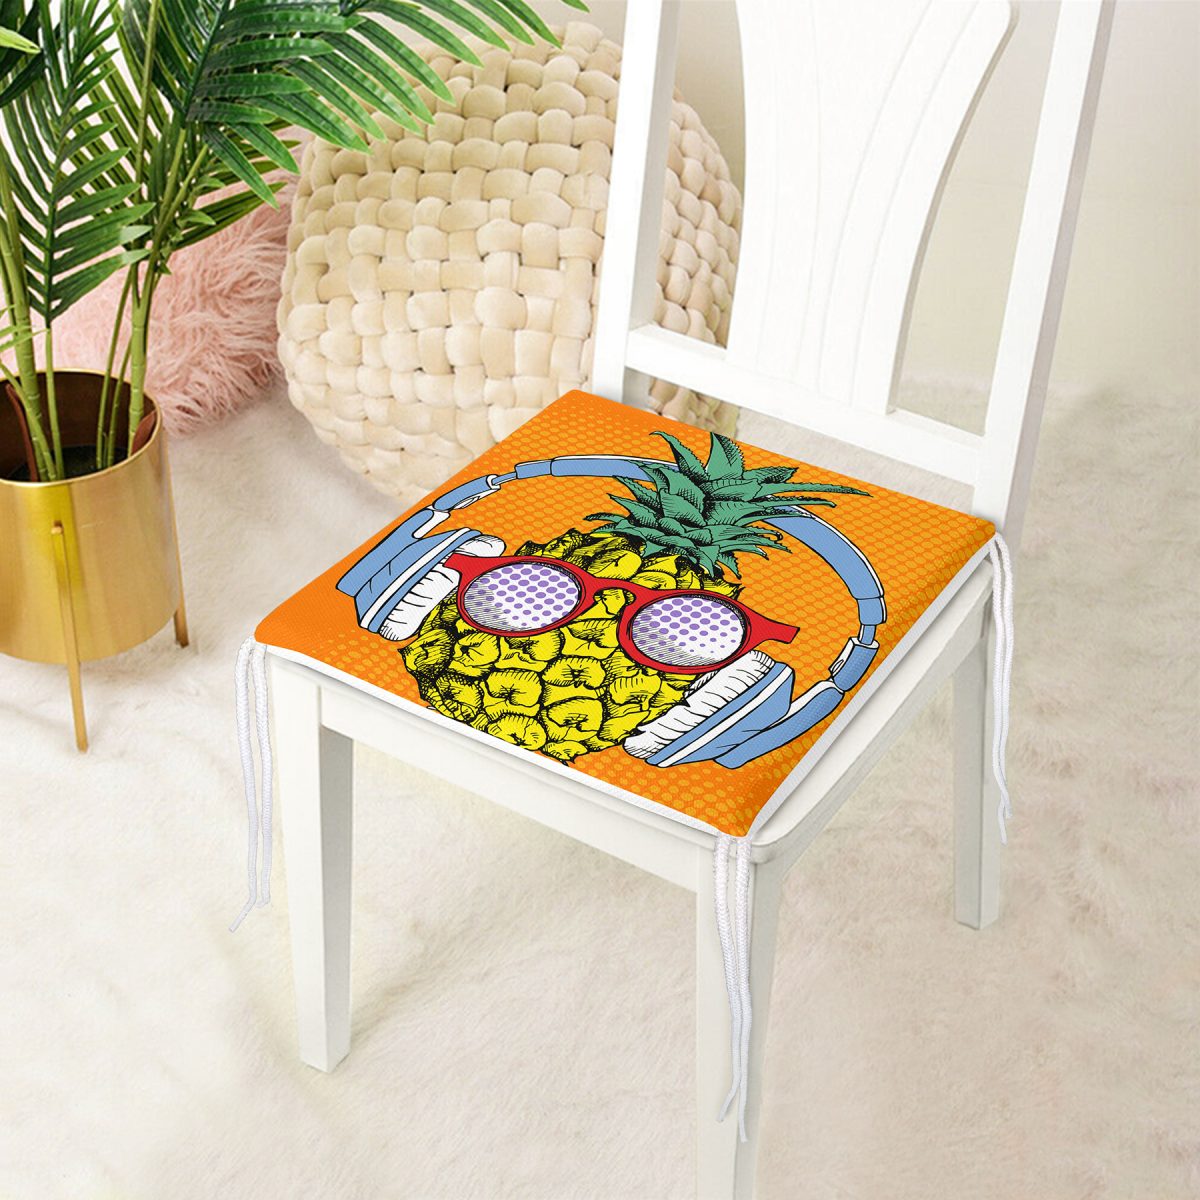 Turuncu Zeminde Summer Ananas Tasarımlı Fermuarlı Sandalye Minderi Realhomes